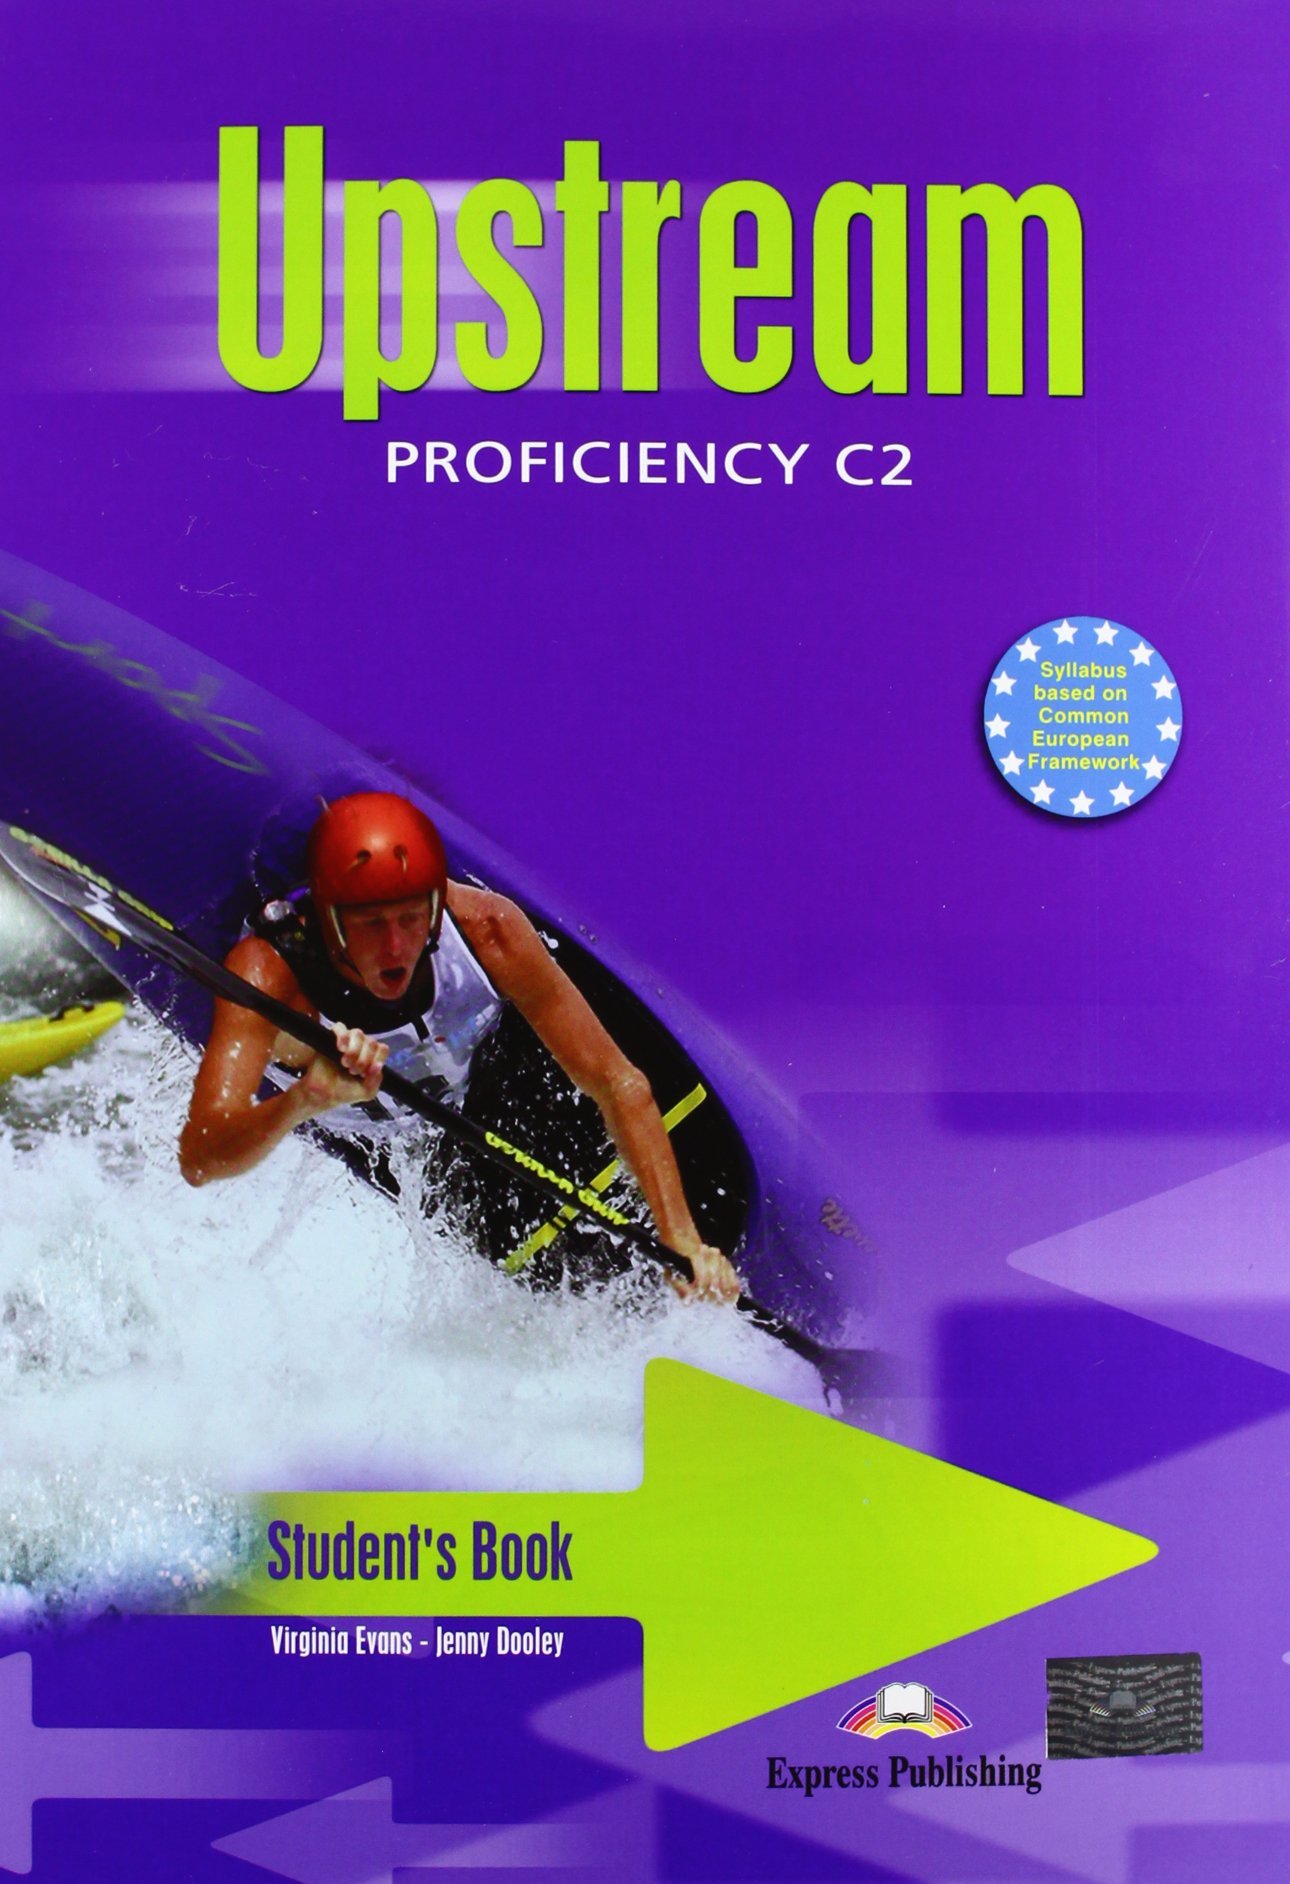 Upstream elementary. Upstream c2 student's book. Upstream учебник 1. Upstream Proficiency c2. Upstream книга.